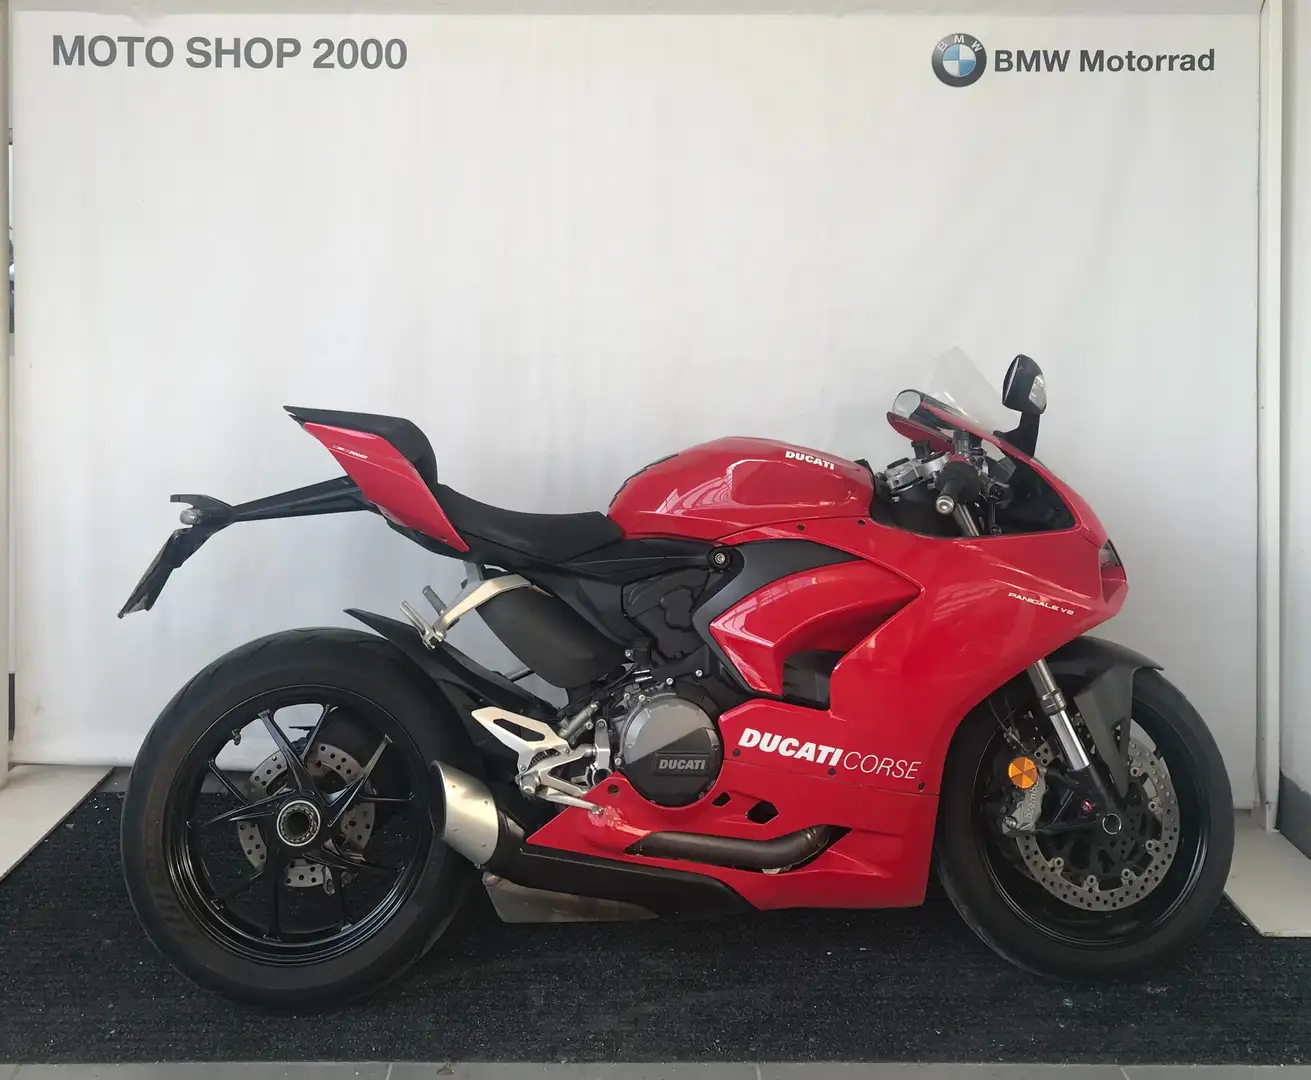 usato Ducati Panigale V2 Super sportive a Capua - Caserta - Ce per €  15.990,-